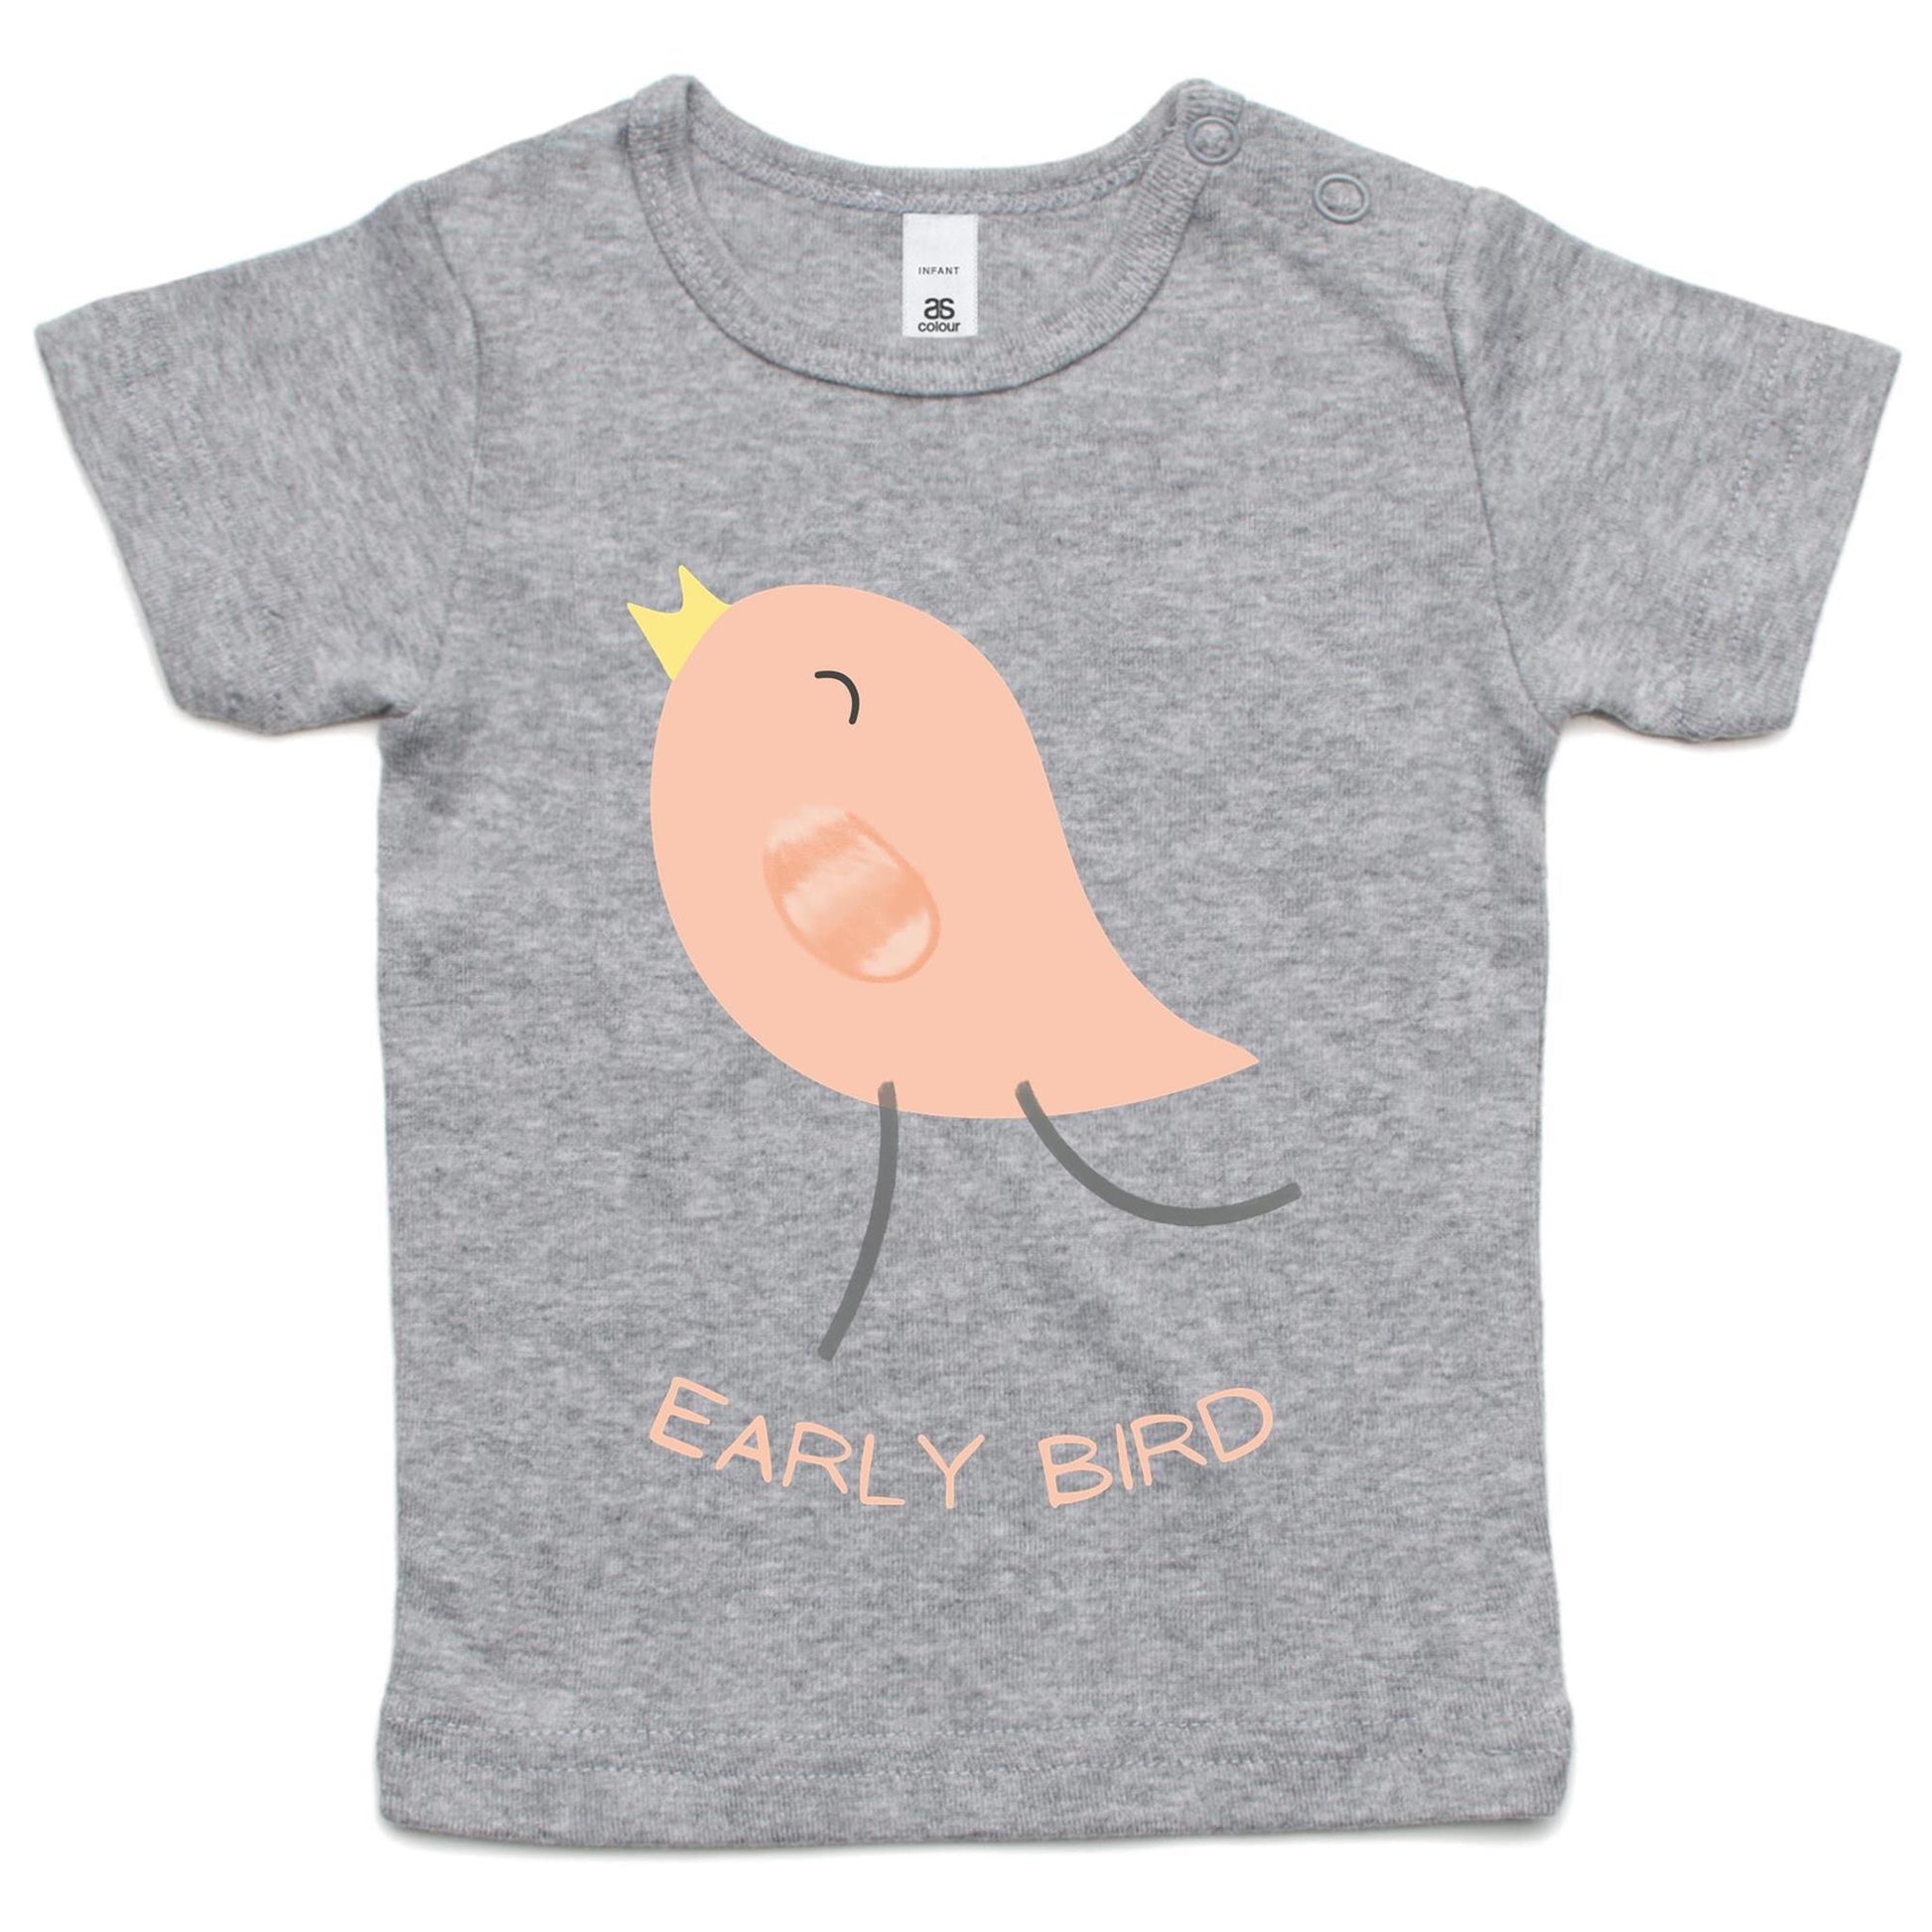 Early Bird - Baby T-shirt Grey Marle Baby T-shirt animal